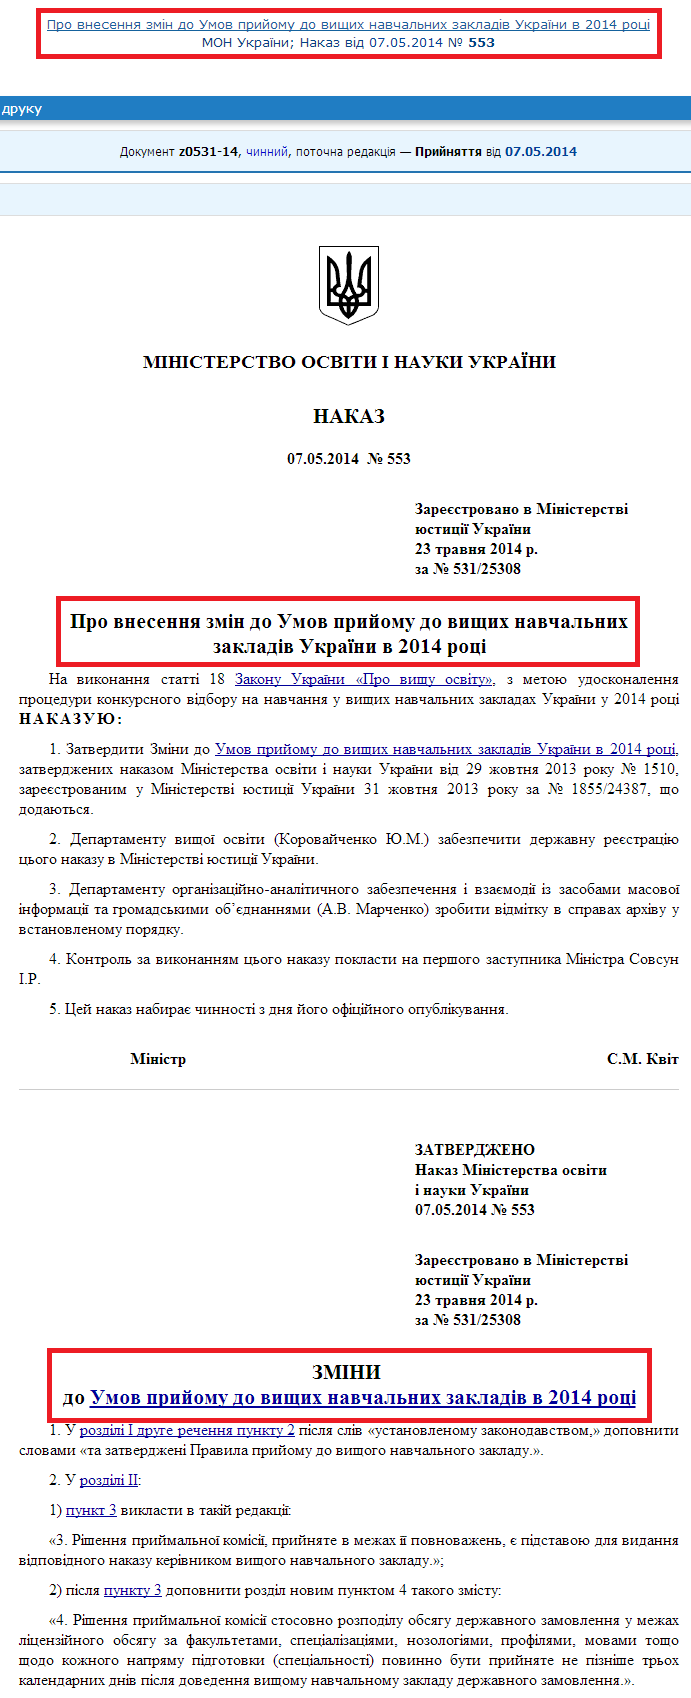 http://zakon2.rada.gov.ua/laws/show/z0531-14/paran2#n2